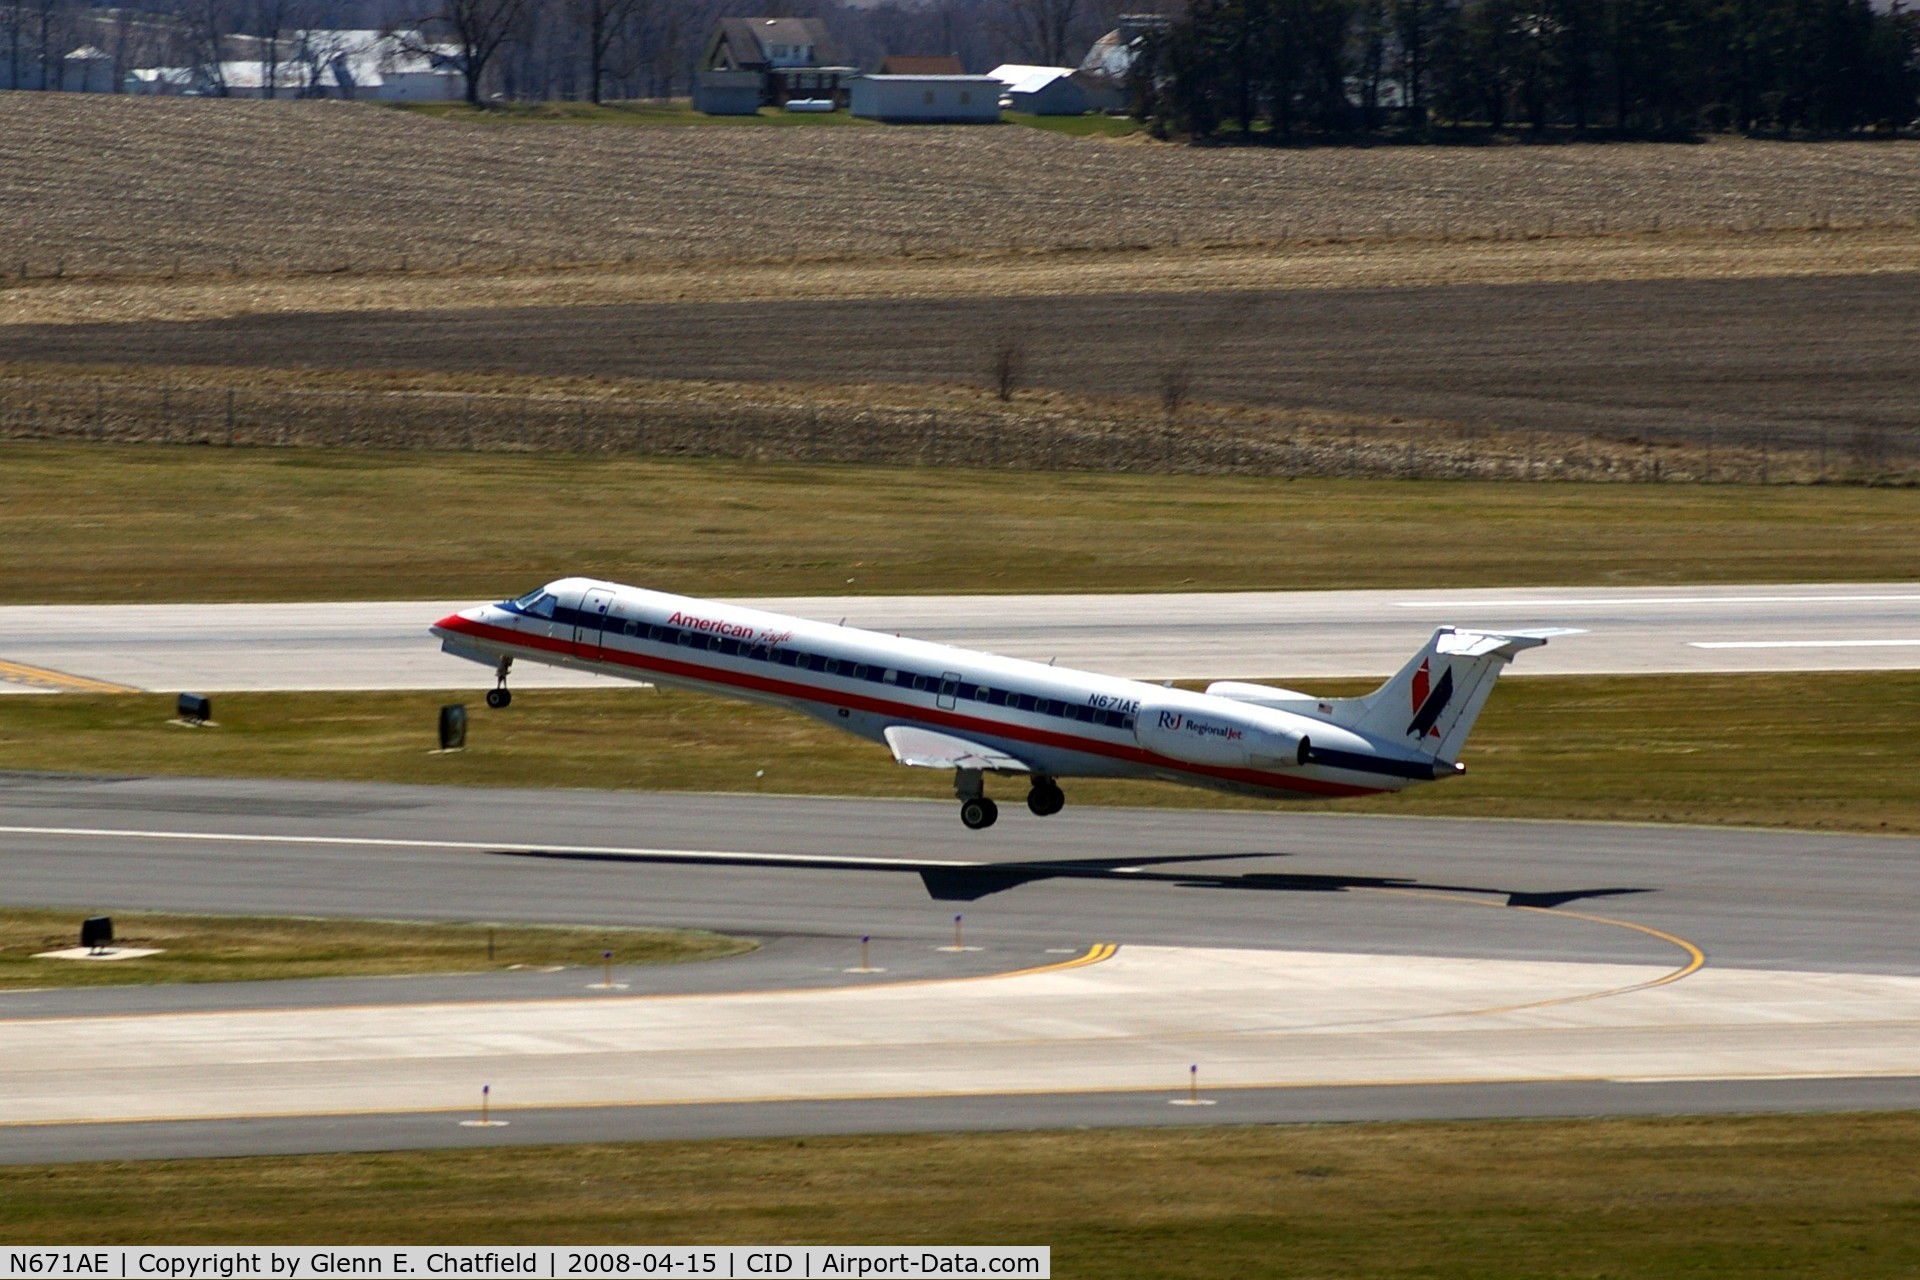 N671AE, 2004 Embraer ERJ-145LR (EMB-145LR) C/N 145793, Taking off Runway 13, airborne by 2800 feet